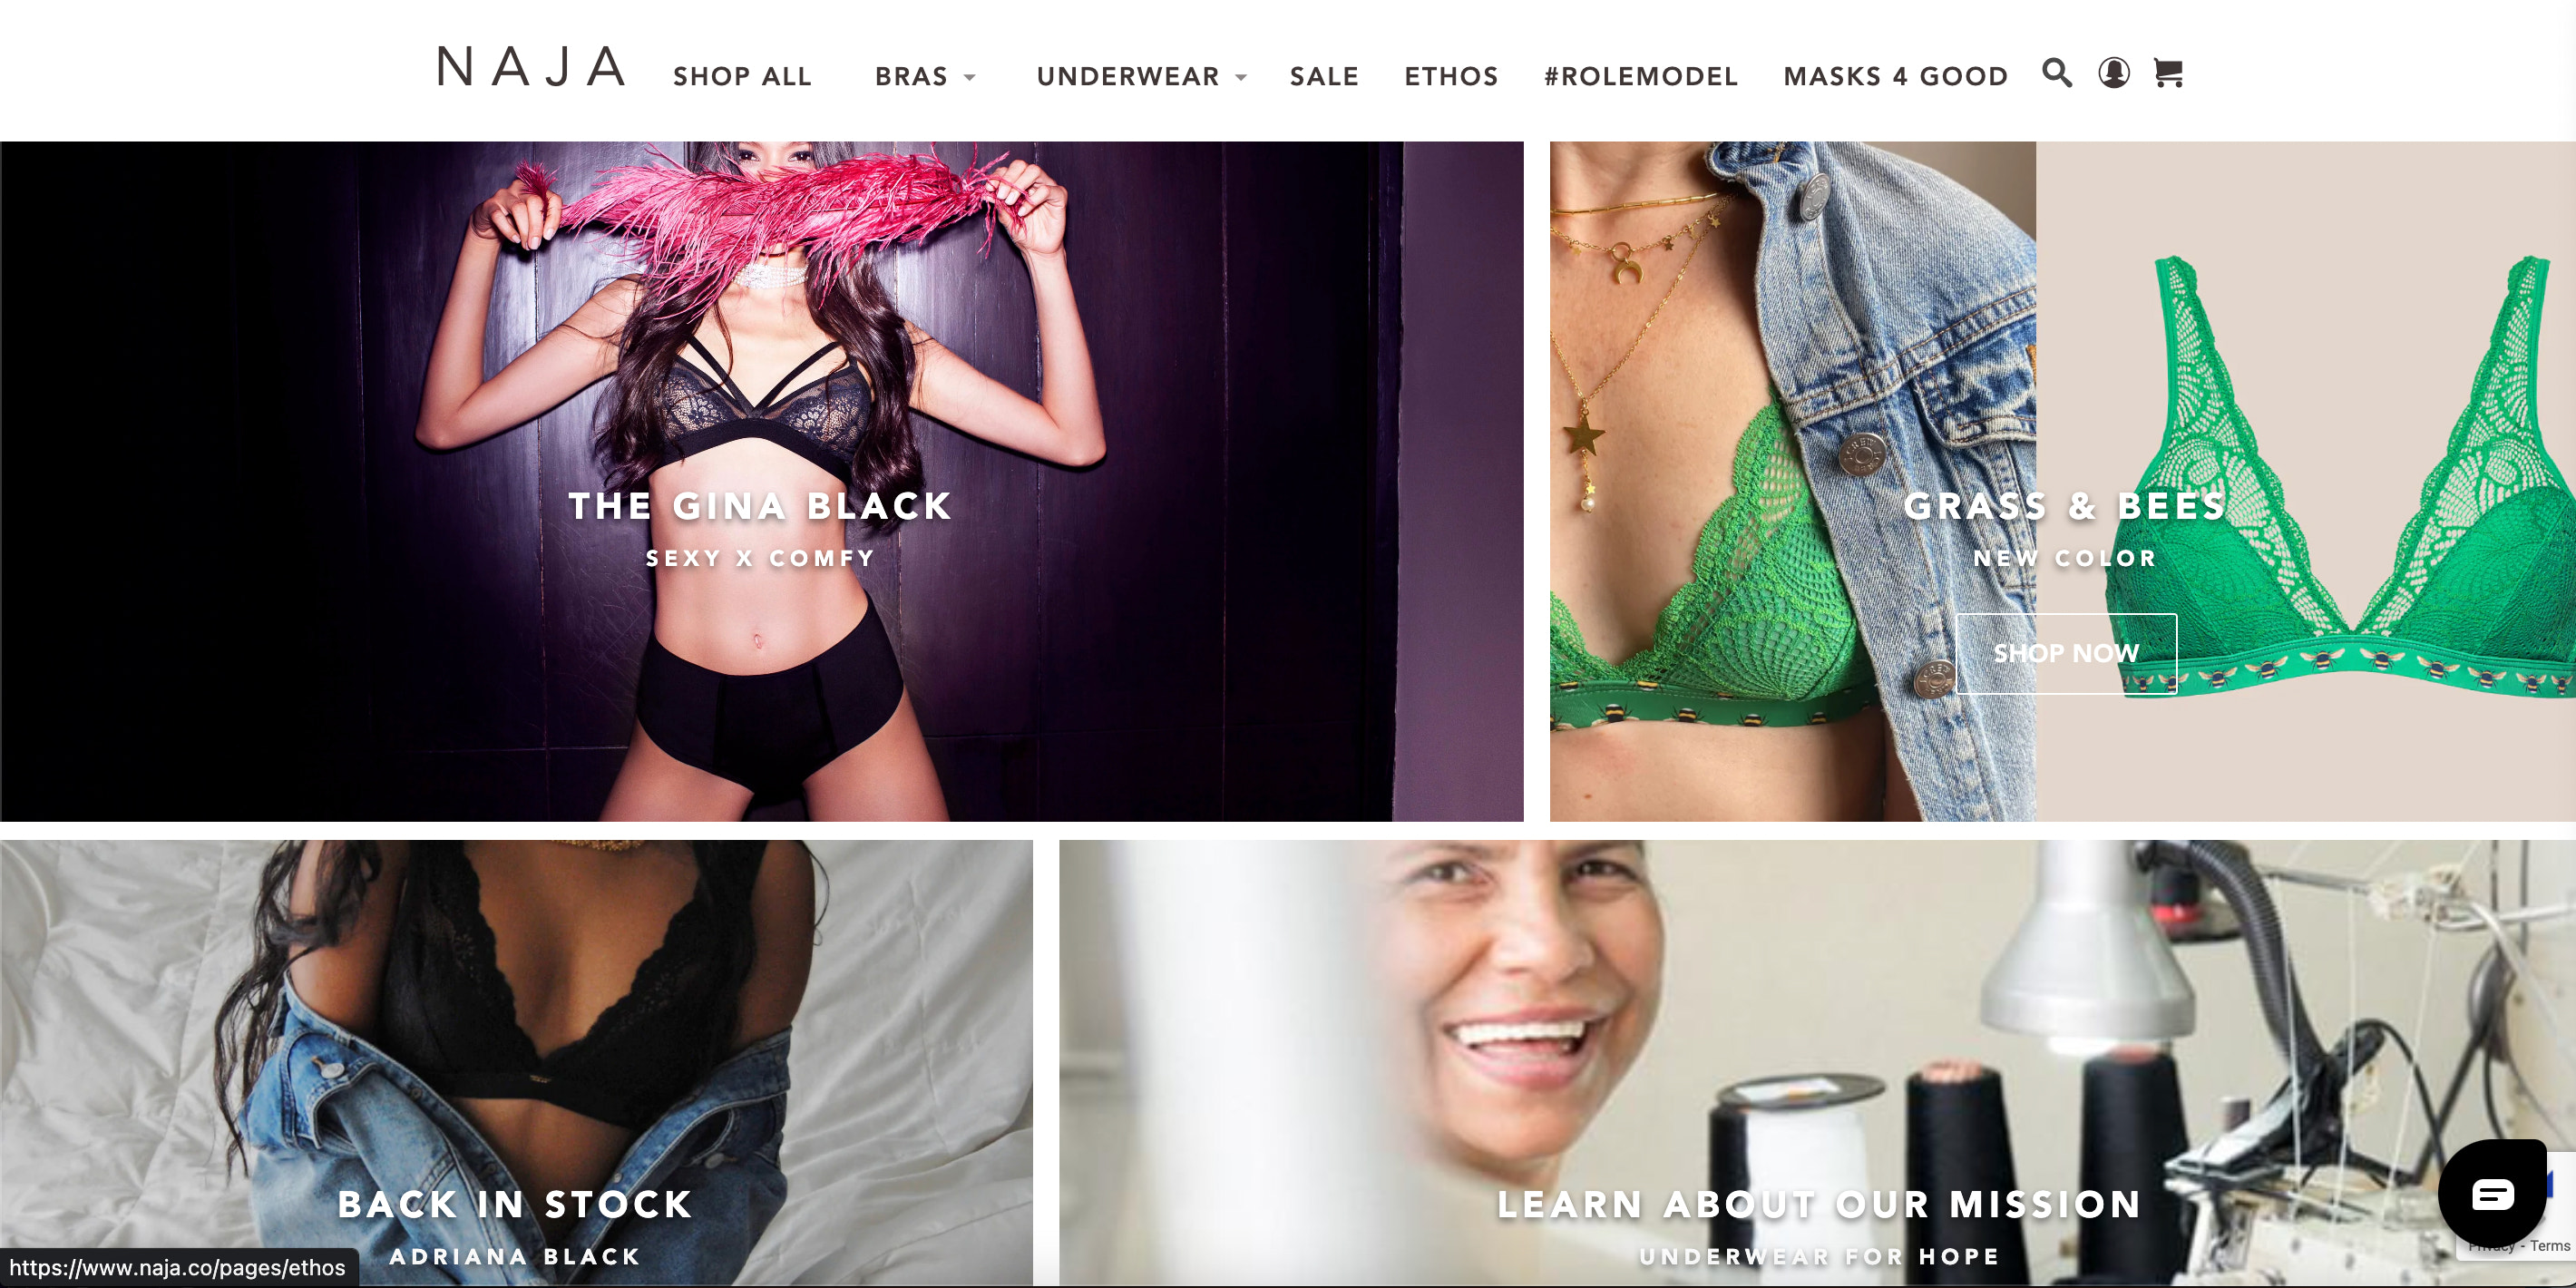 Naja underwear: websites to inspire entrepreneurs